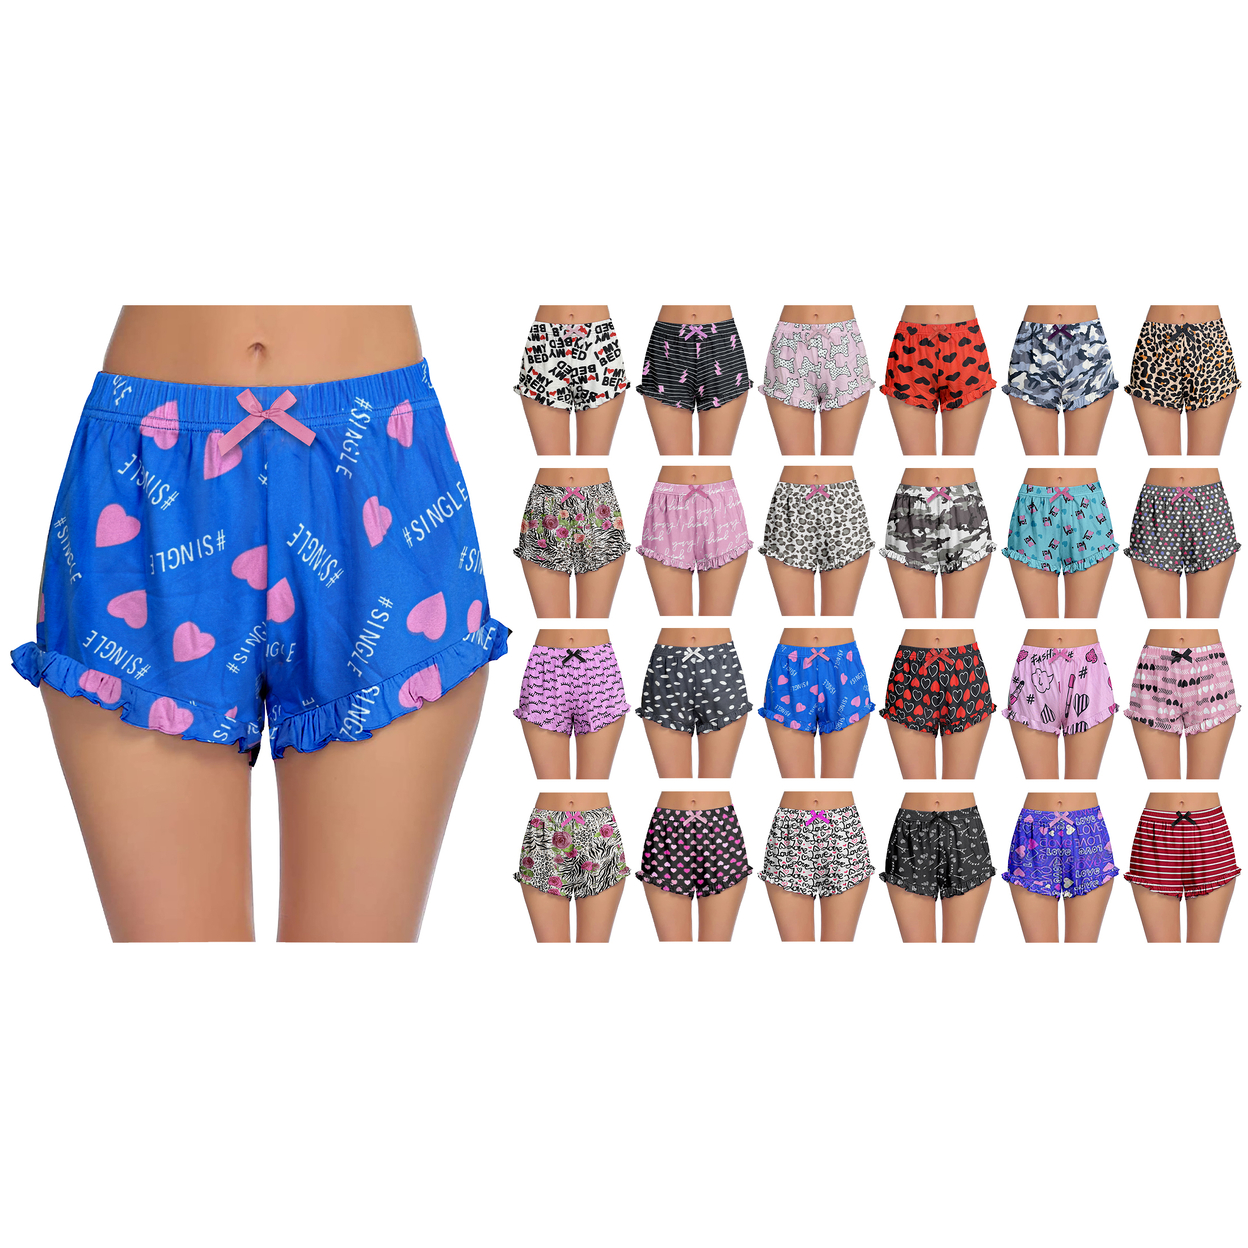 3-Pack: Women's Ultra Soft Cozy Fun Print Ruffled Hem Sleep Lounge Pajama Shorts - Small, Love